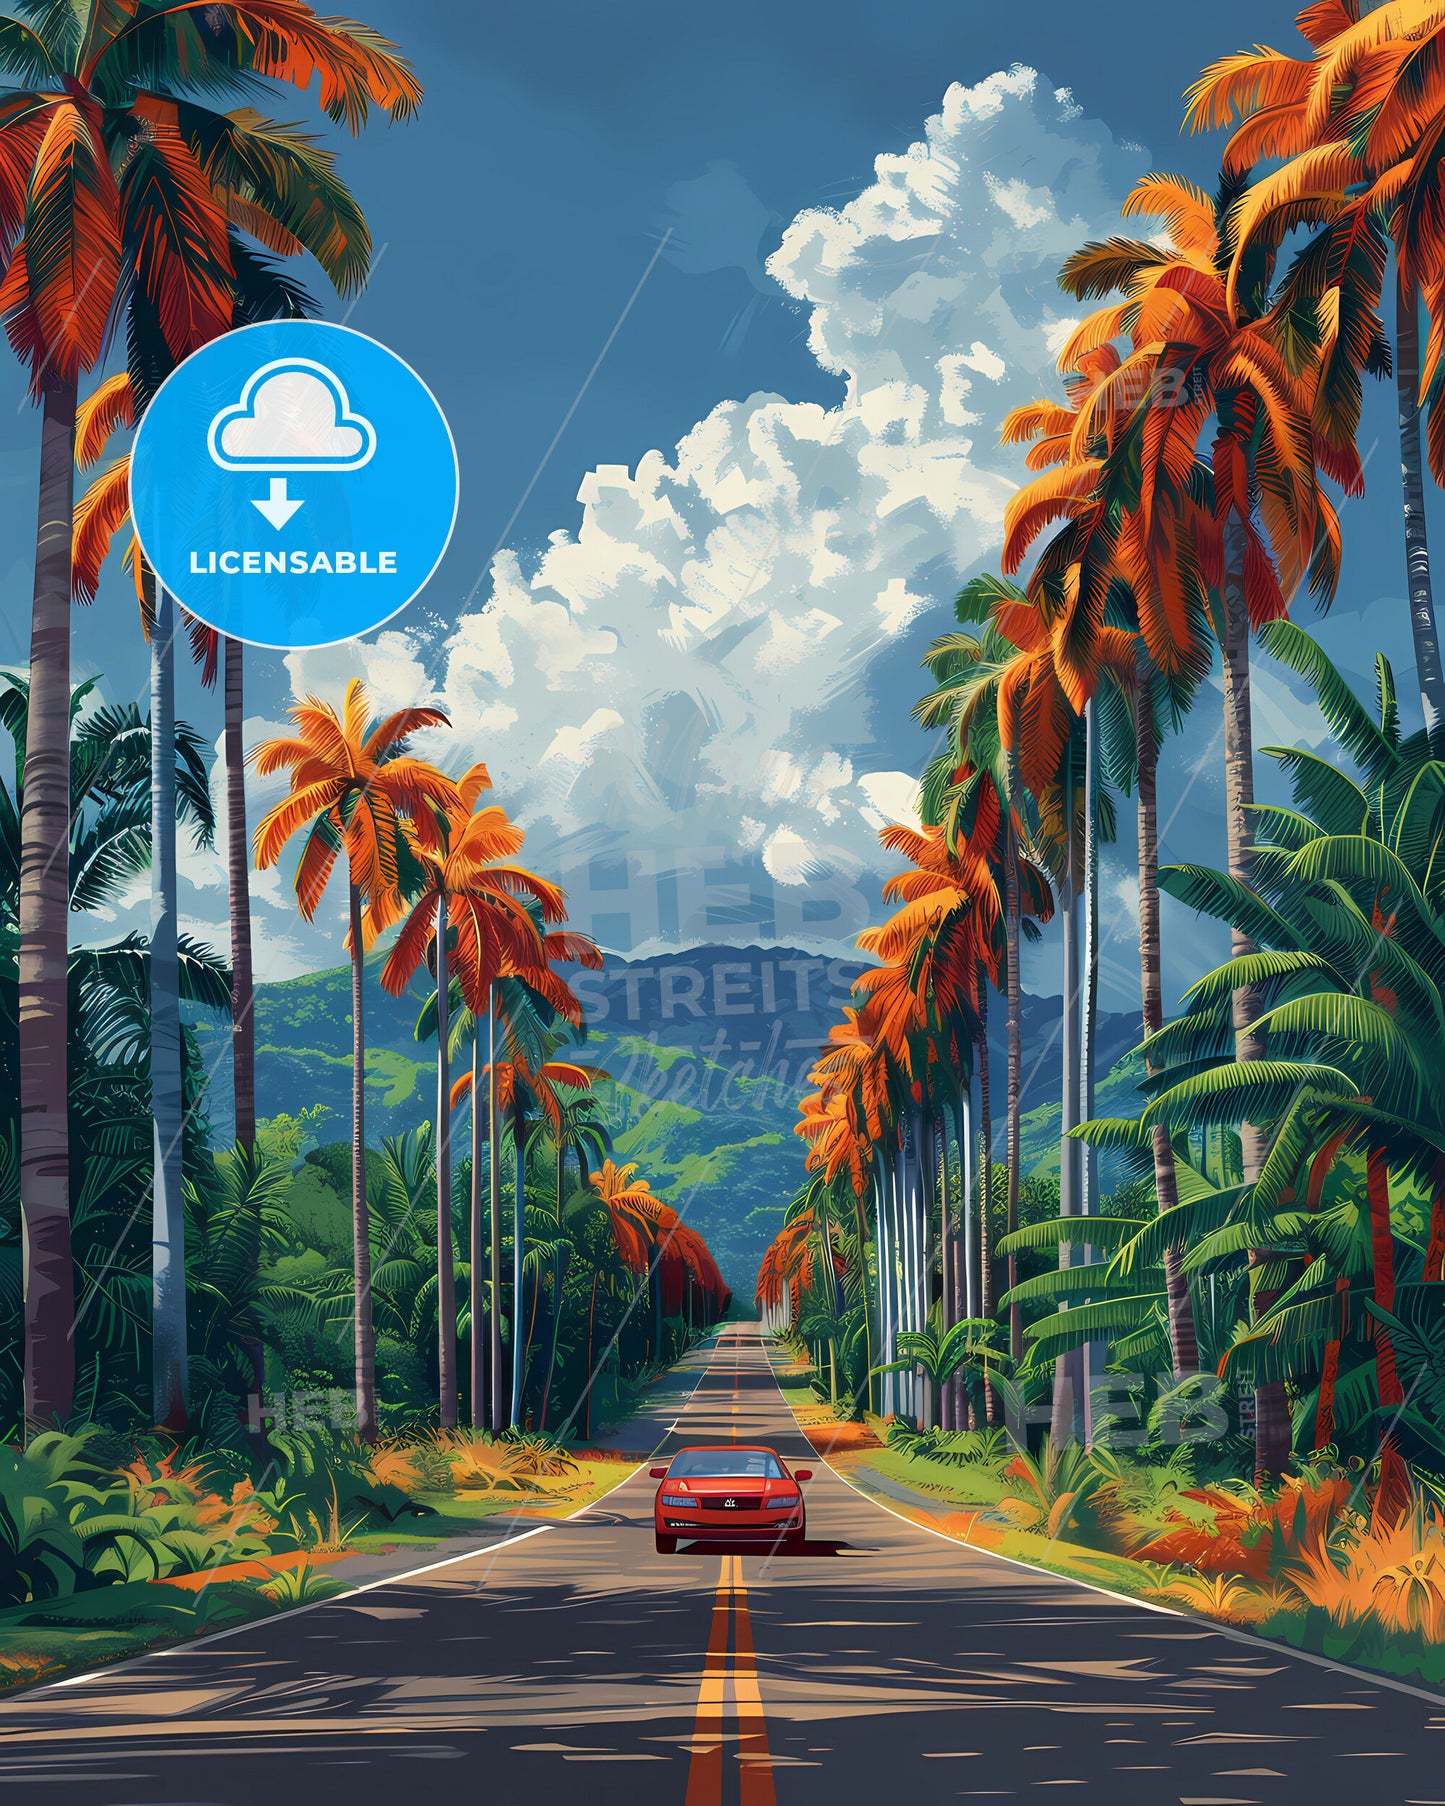 Vibrant Panama Roadside Art: Car amidst Palm Trees in North American Landscape